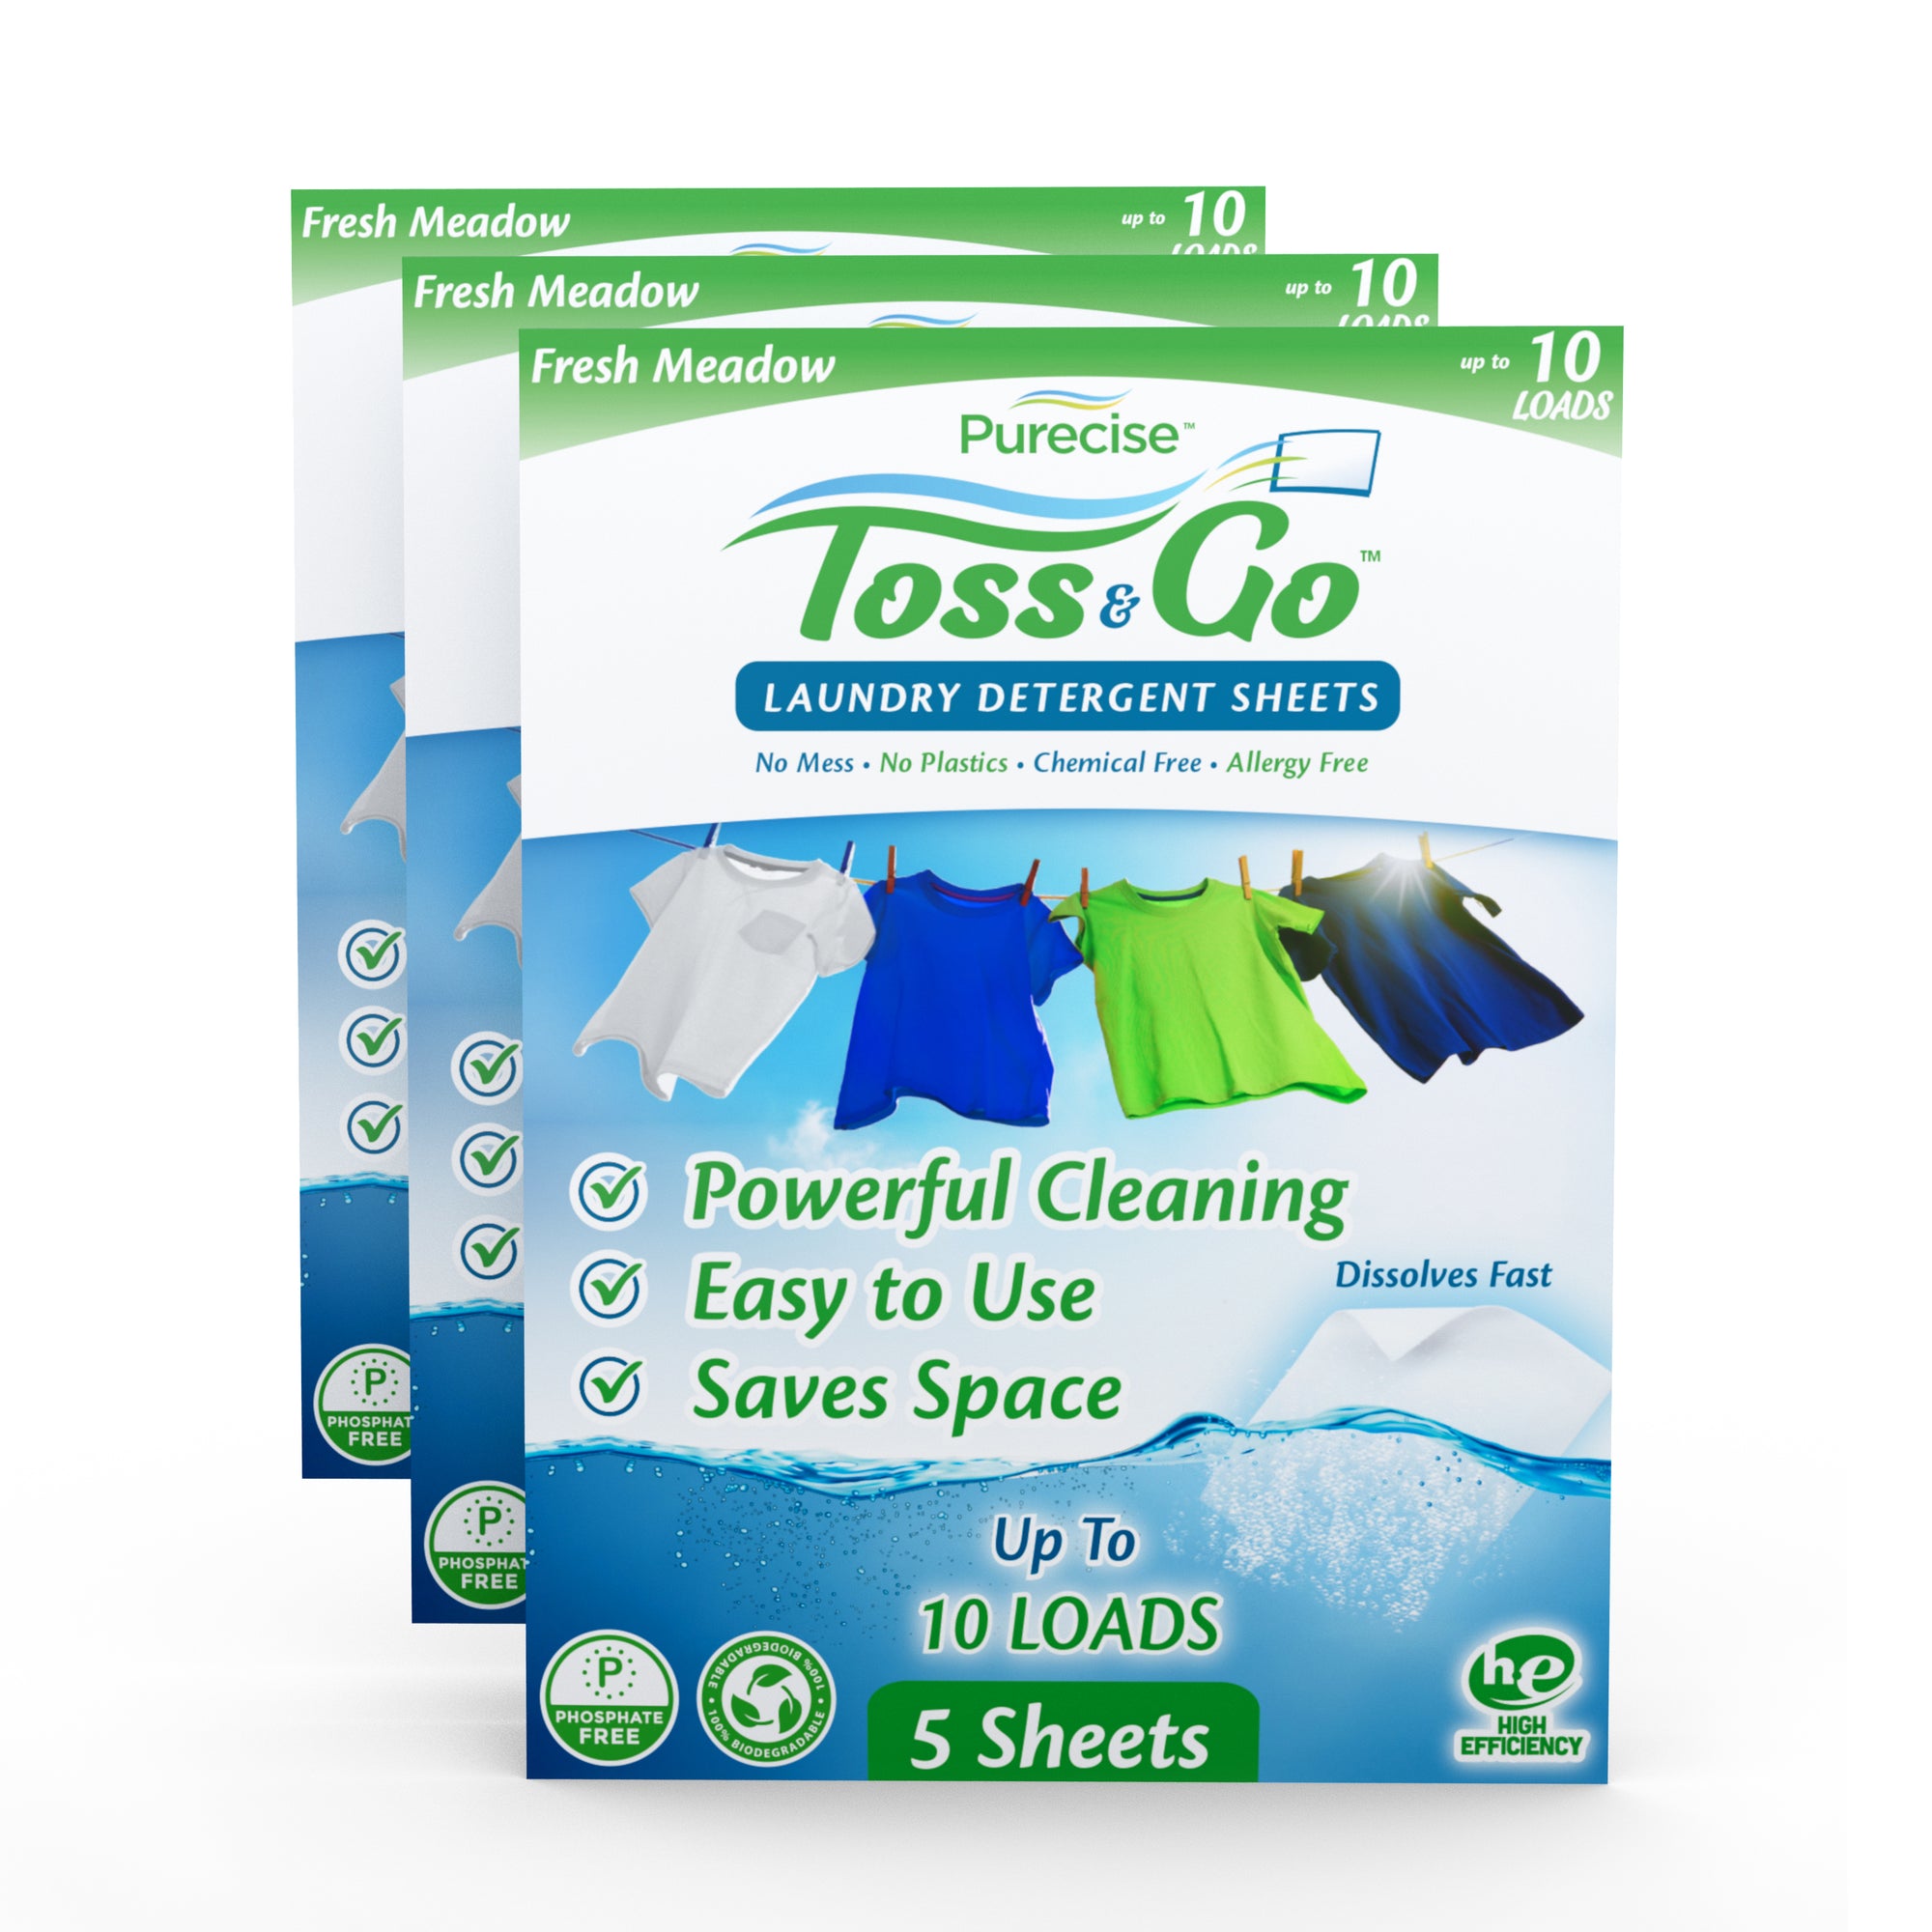 Toss & Go Laundry Detergent Sheets